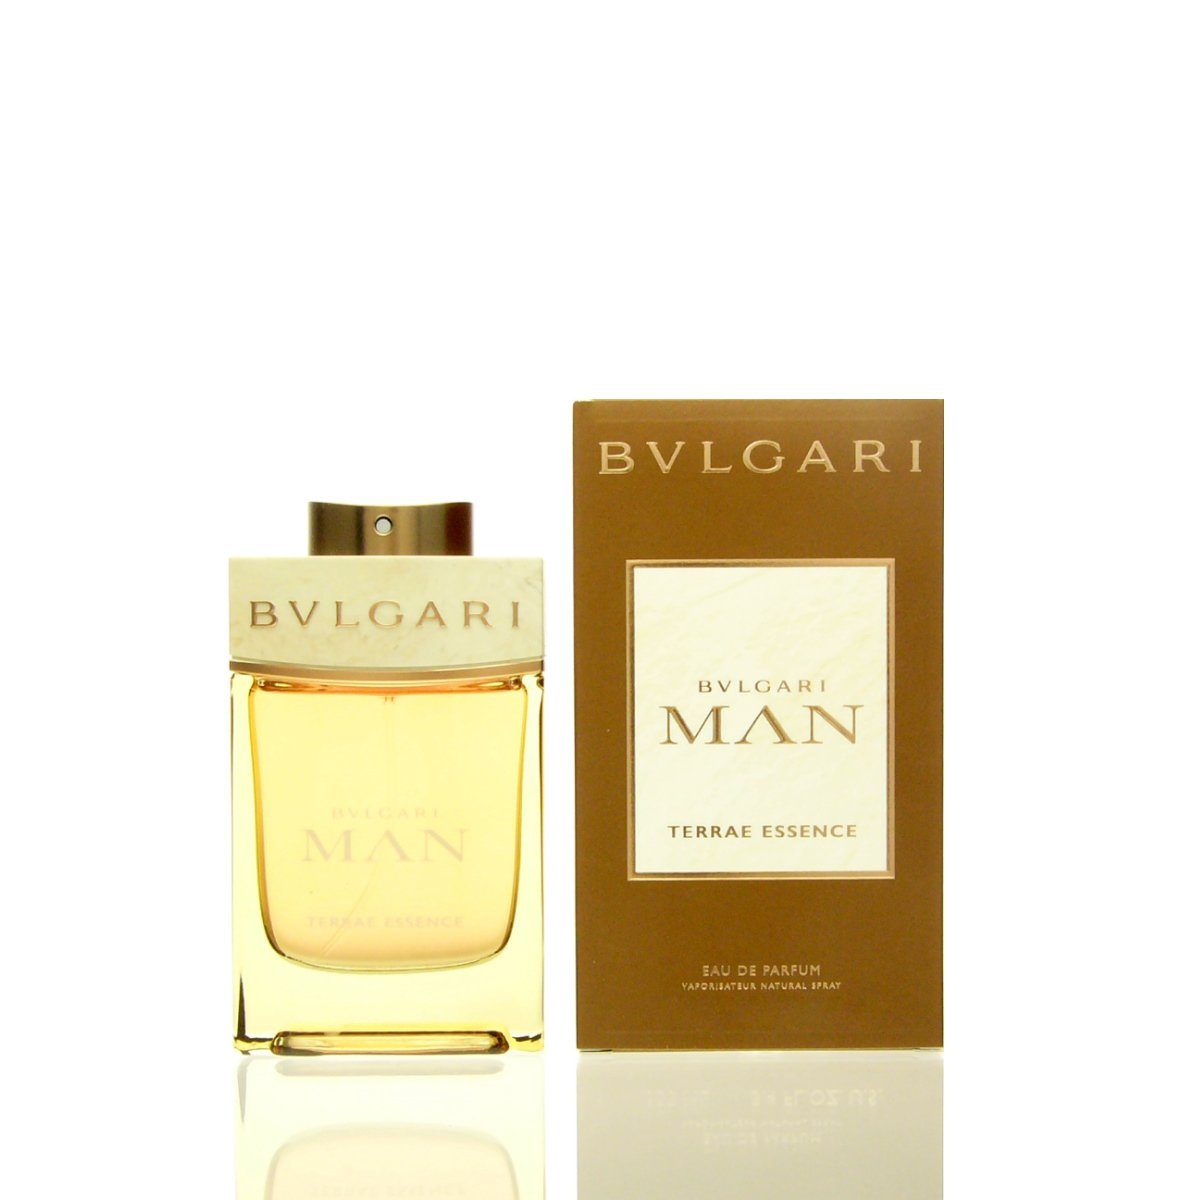 100 Man Eau Parfum Eau Essence Bvlgari de Terrae BVLGARI Parfum de ml